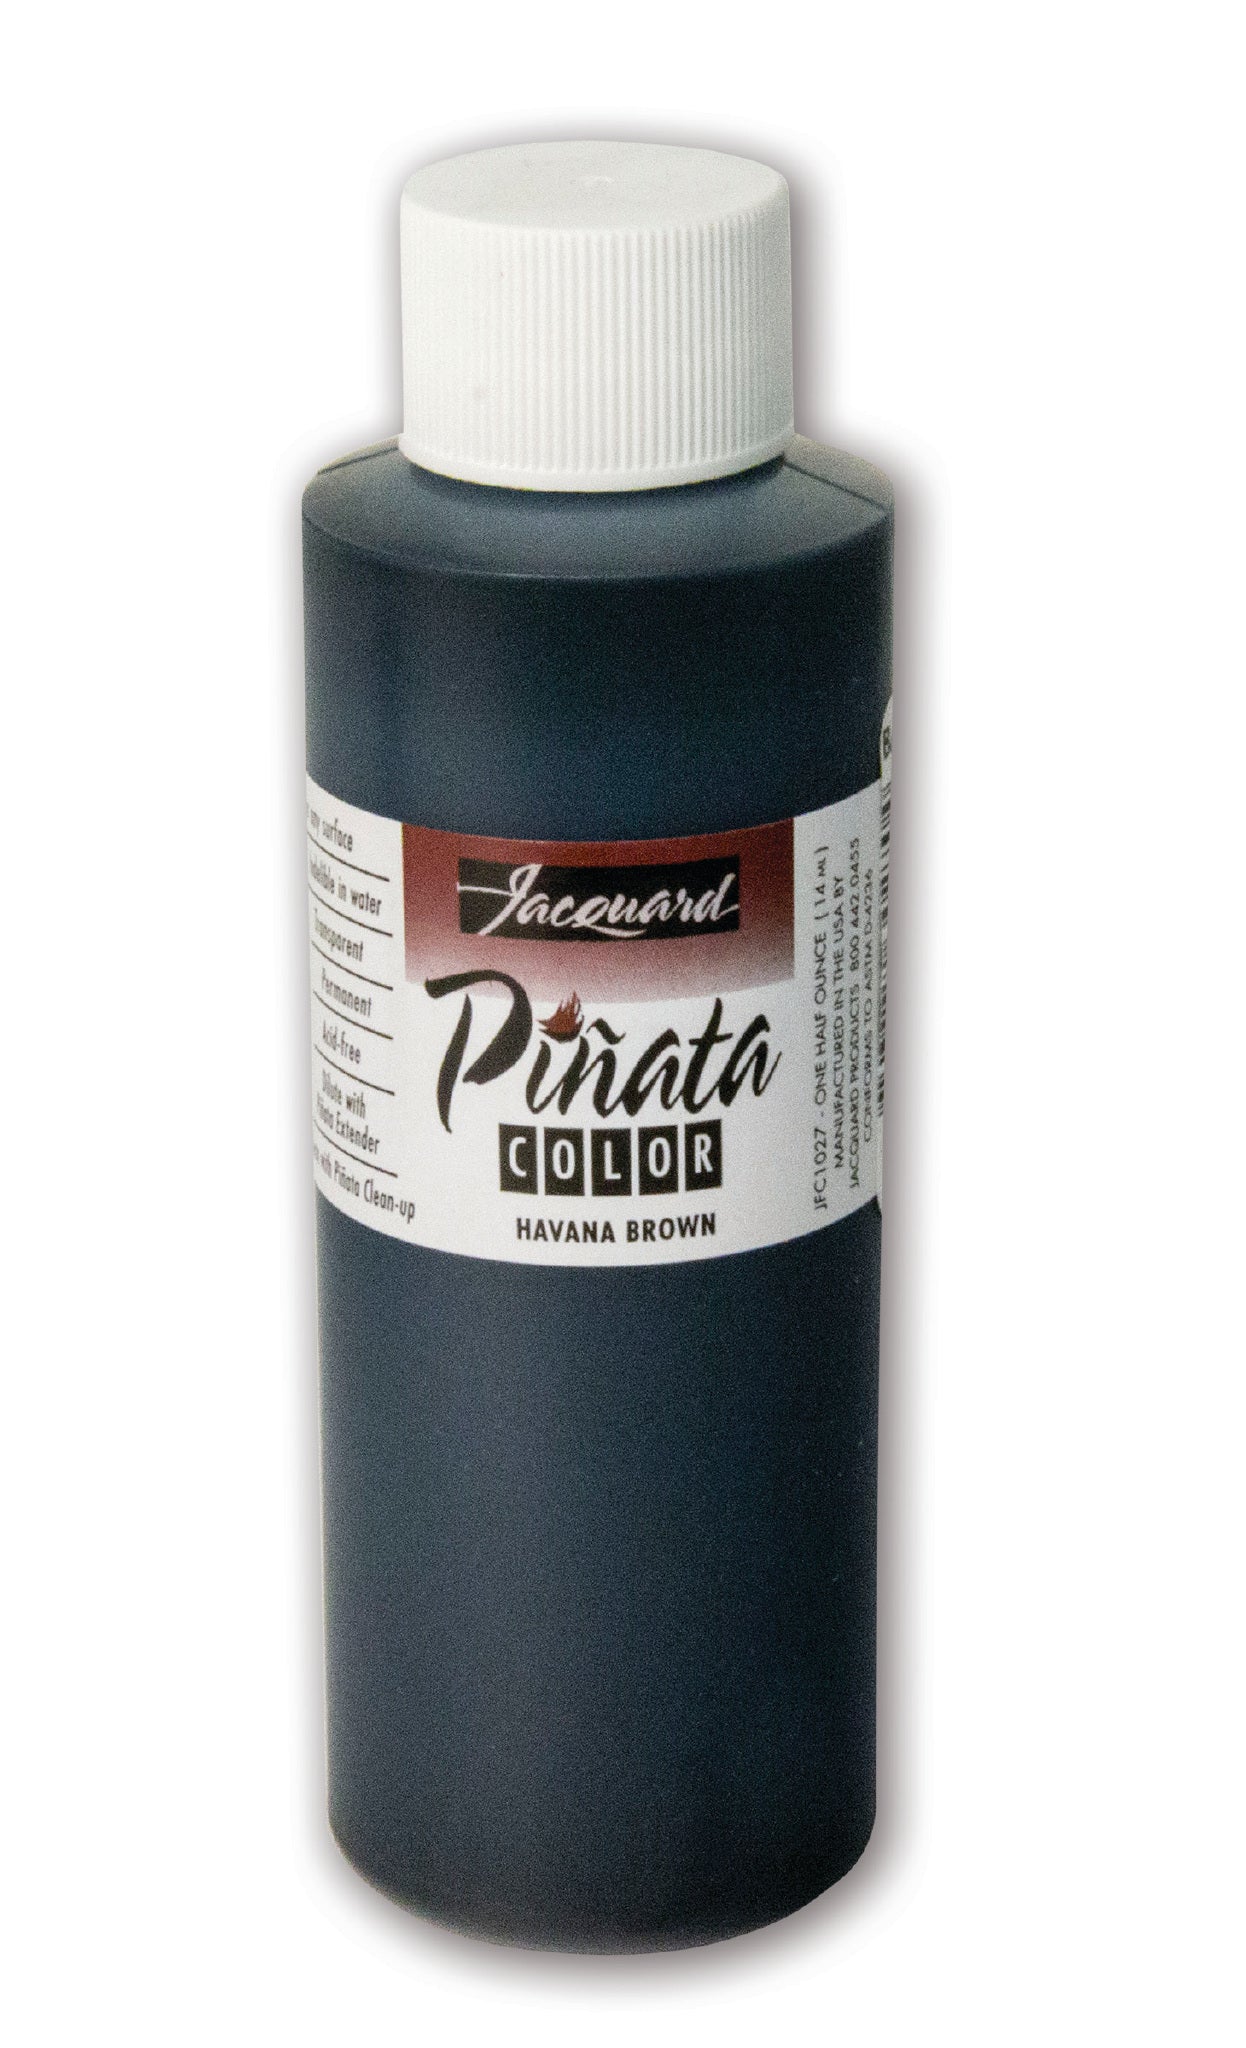 Jacquard Pinata Ink 120ml Havana Brown - theartshop.com.au